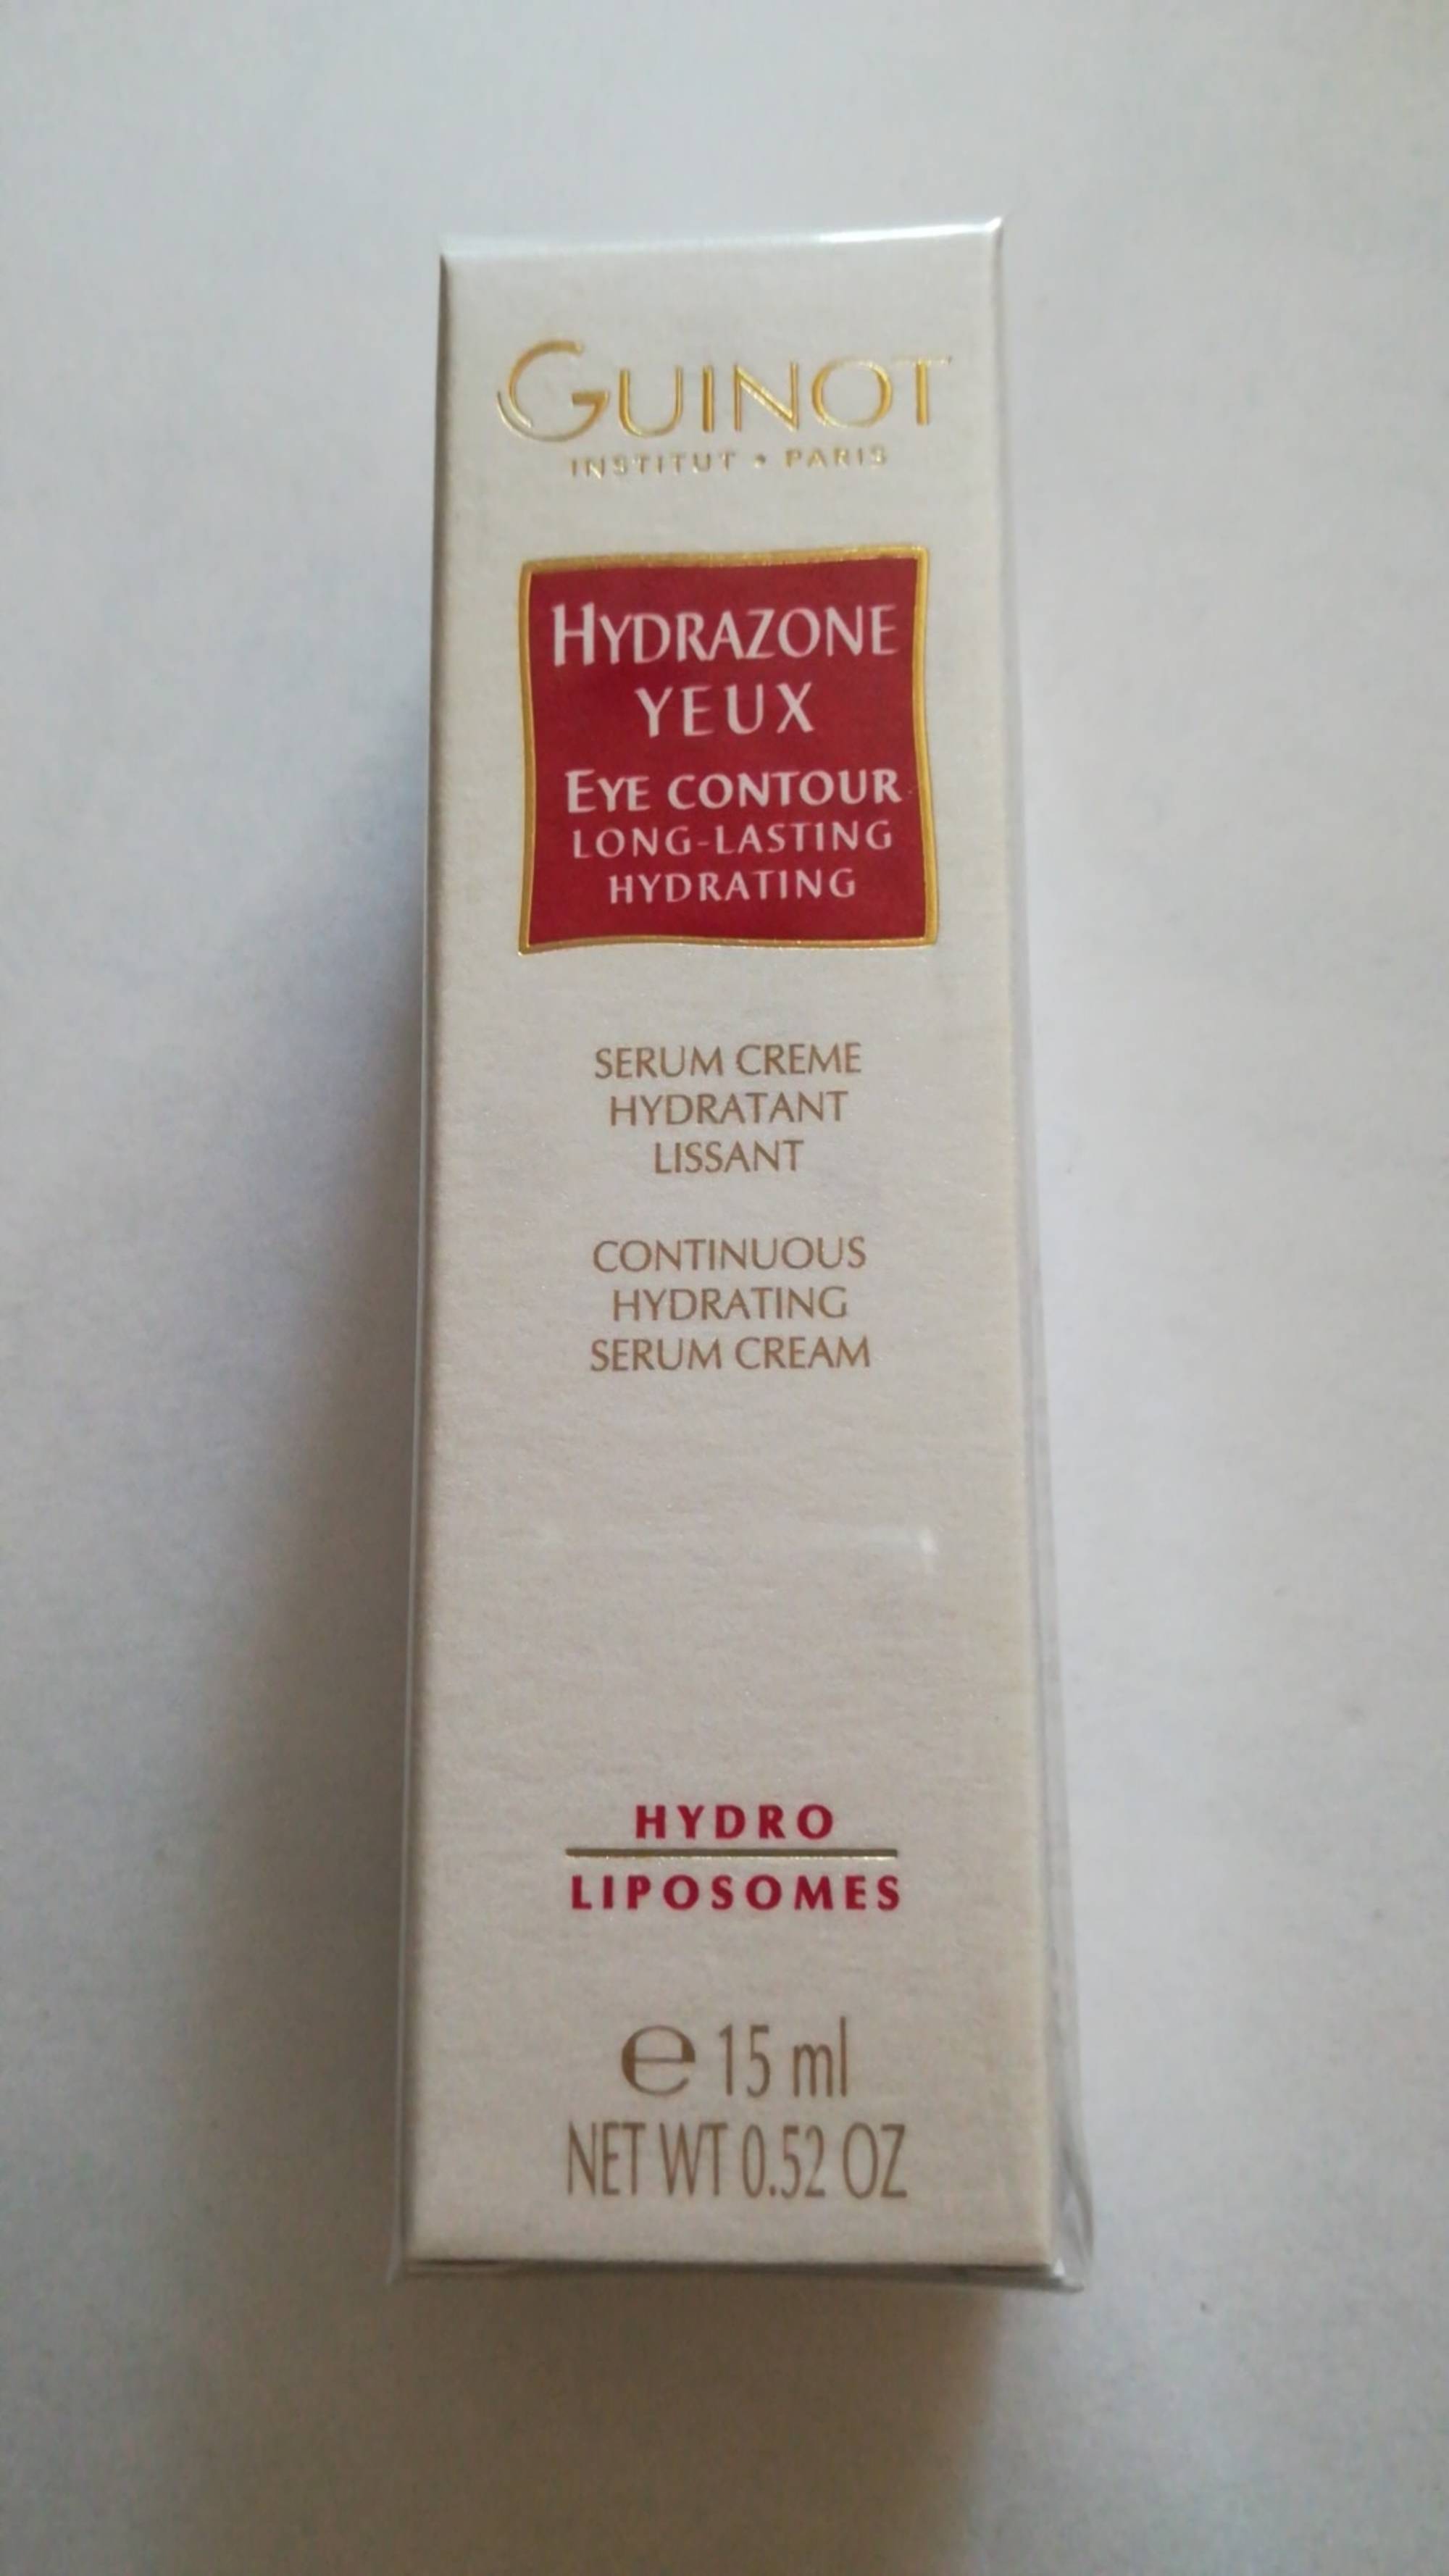 GUINOT - Hydrazone yeux - Serum crème